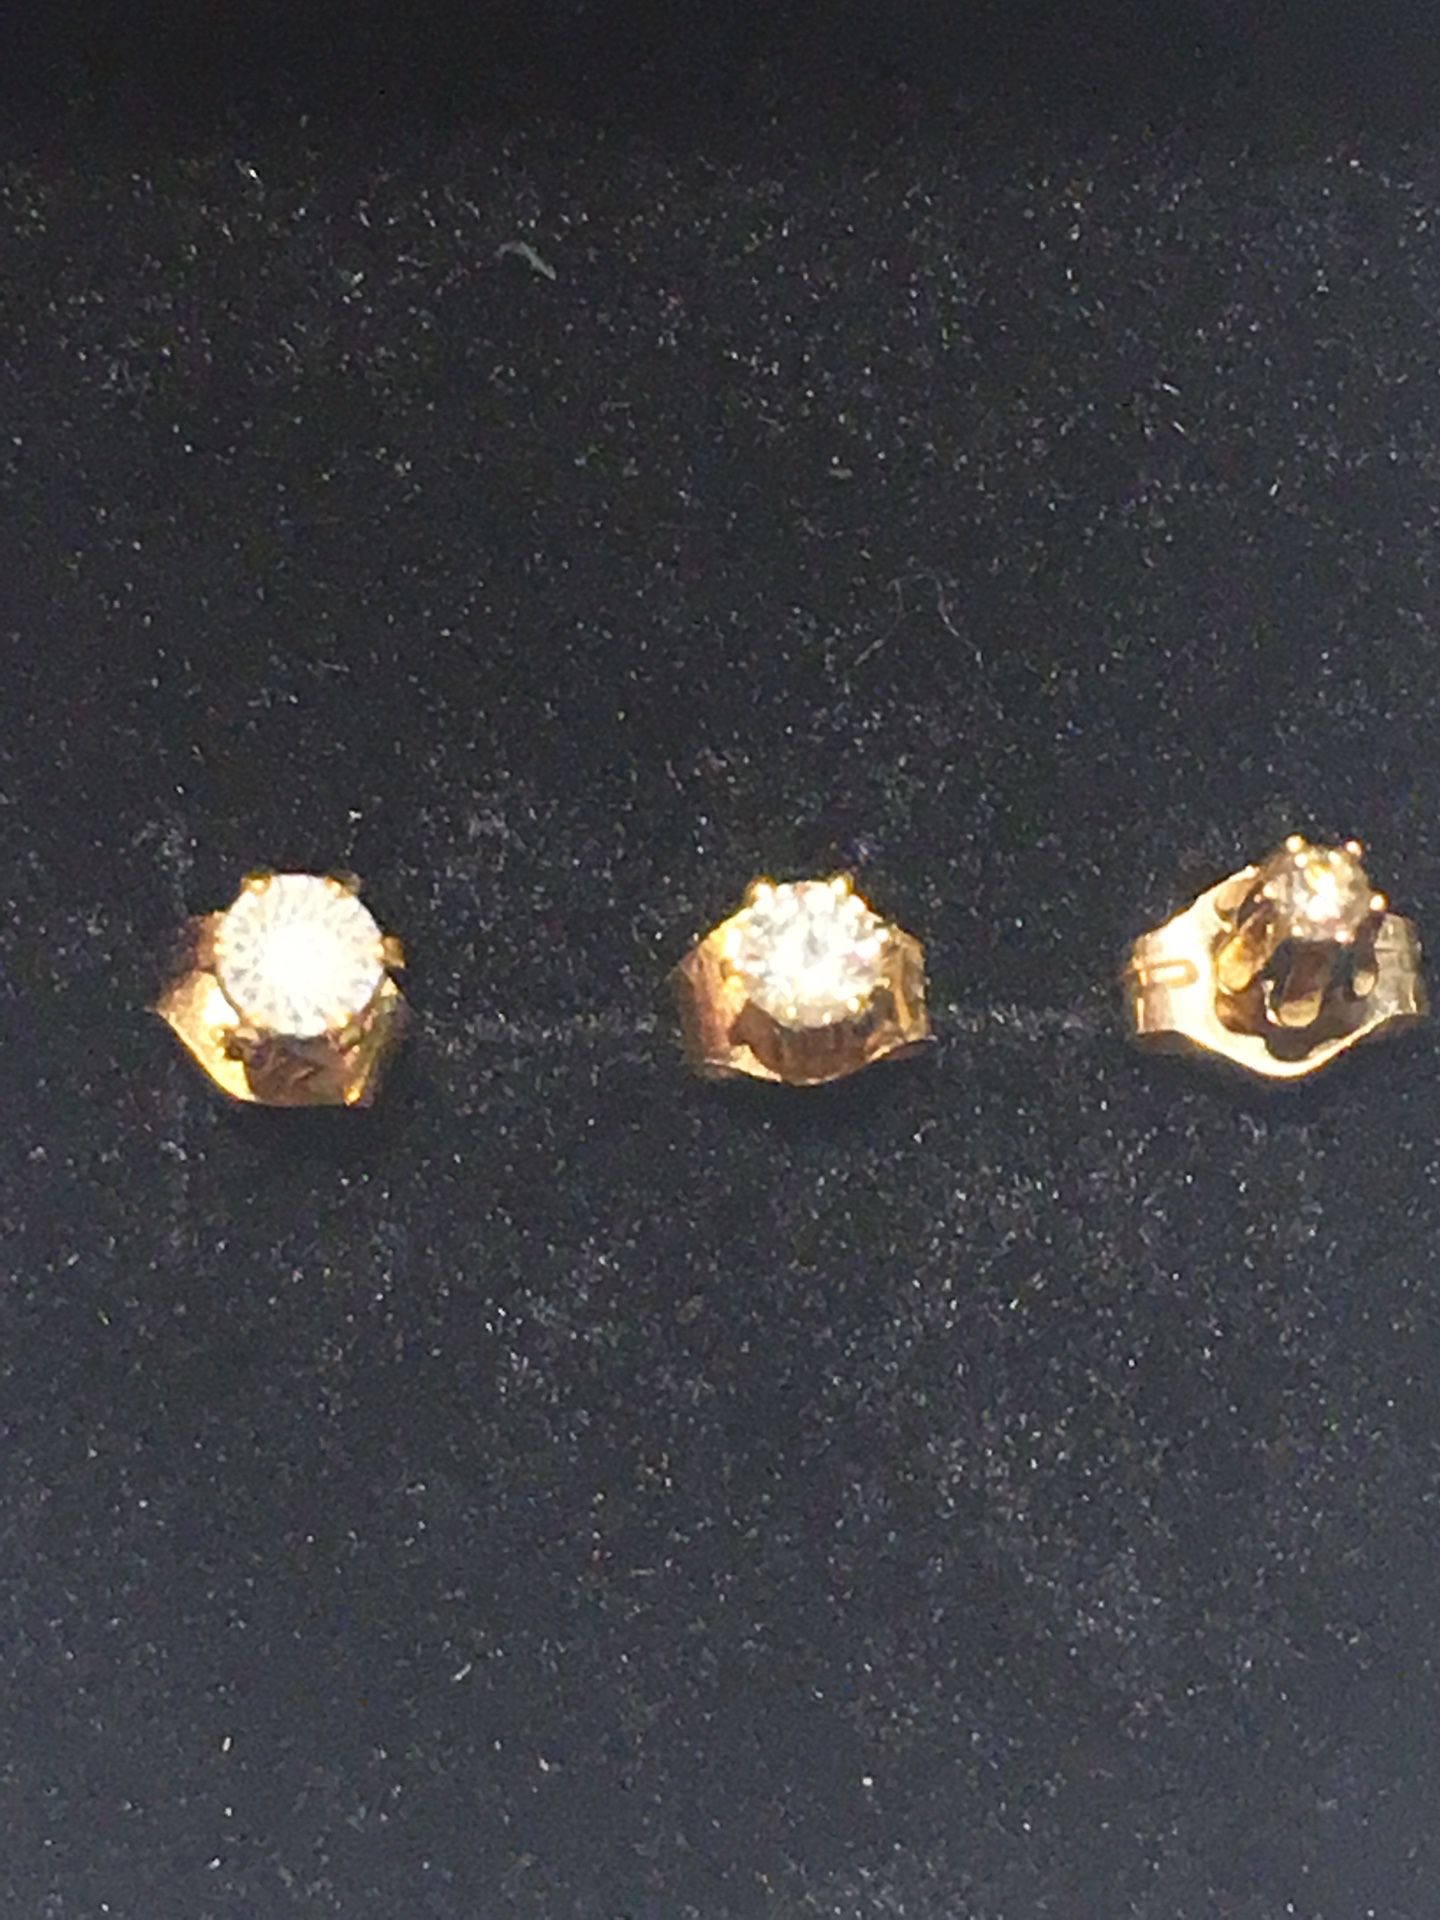 3-Single Diamond Gold Earring studs